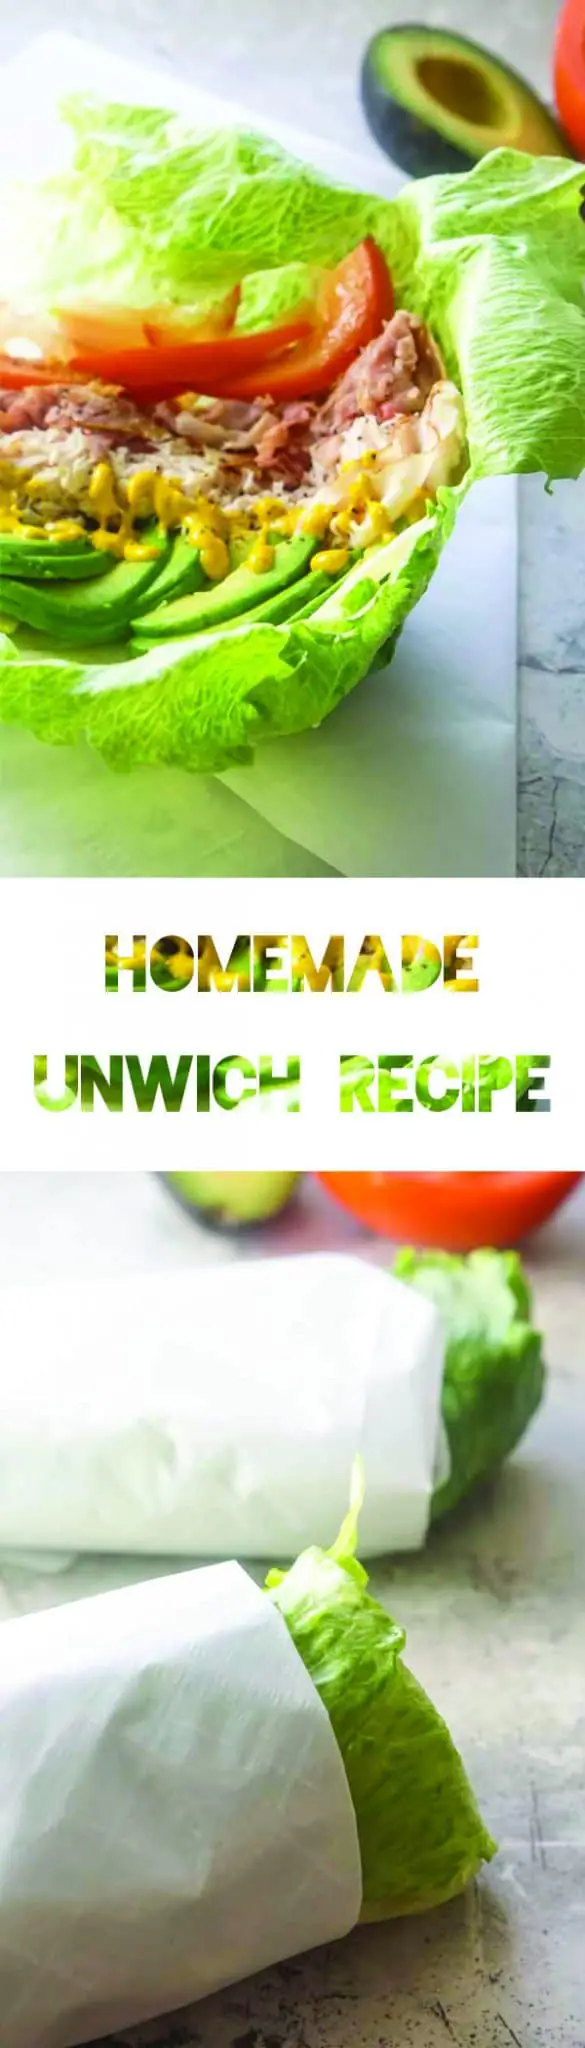 Homemade Unwich Recipe | Keto Diet | Low Carb | Lettuce Wrap | Jimmy John's